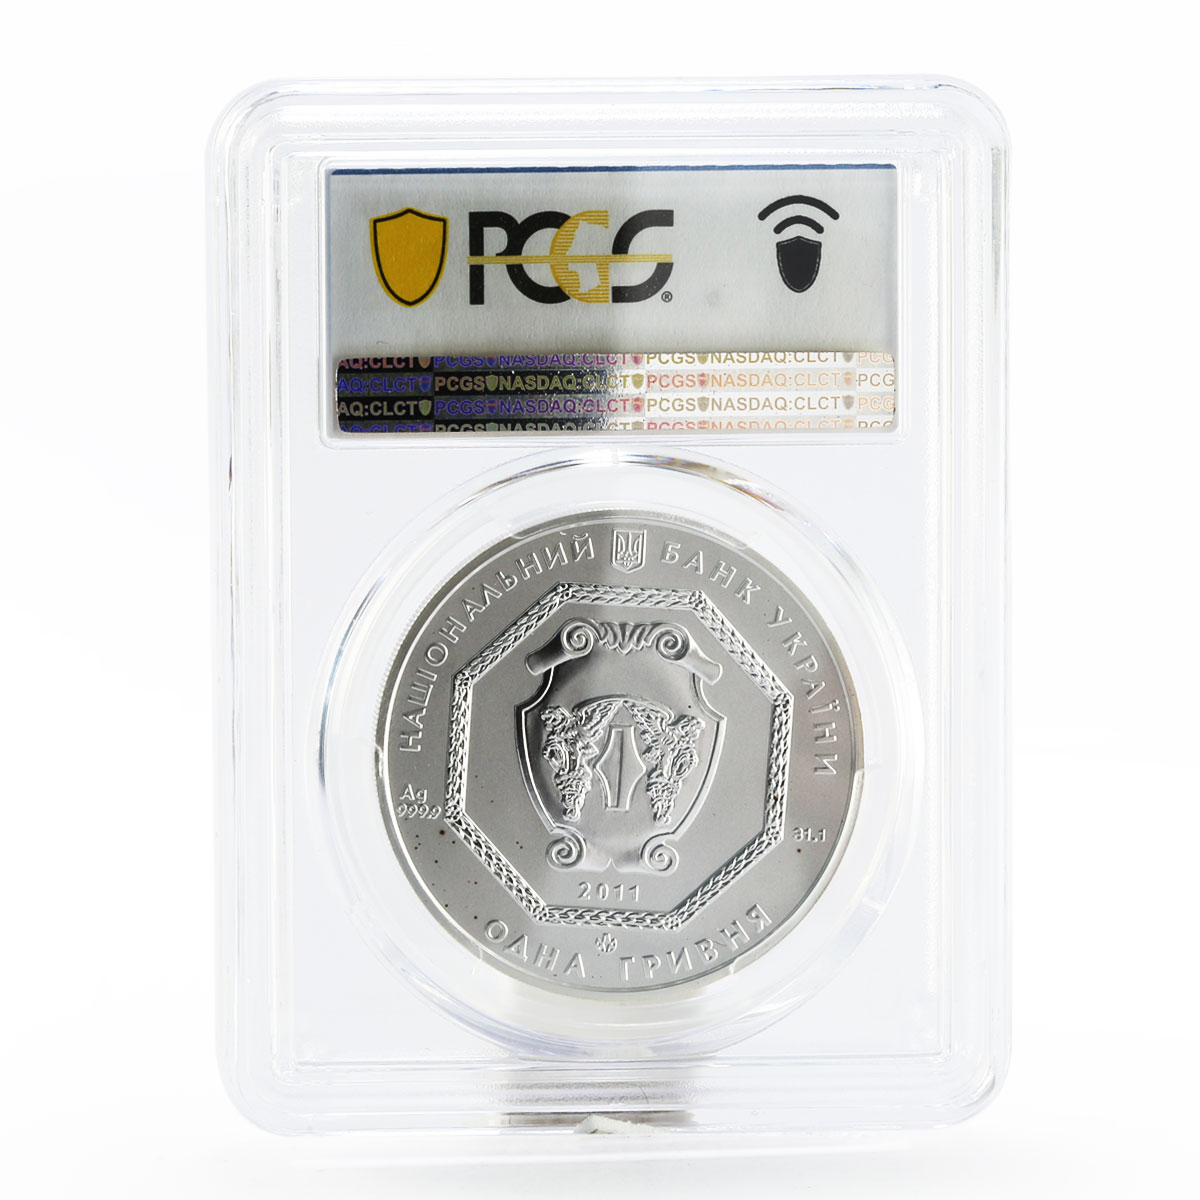 Ukraine 1 hryvnia Faith series Archangel Michael MS69 PCGS silver coin 2011